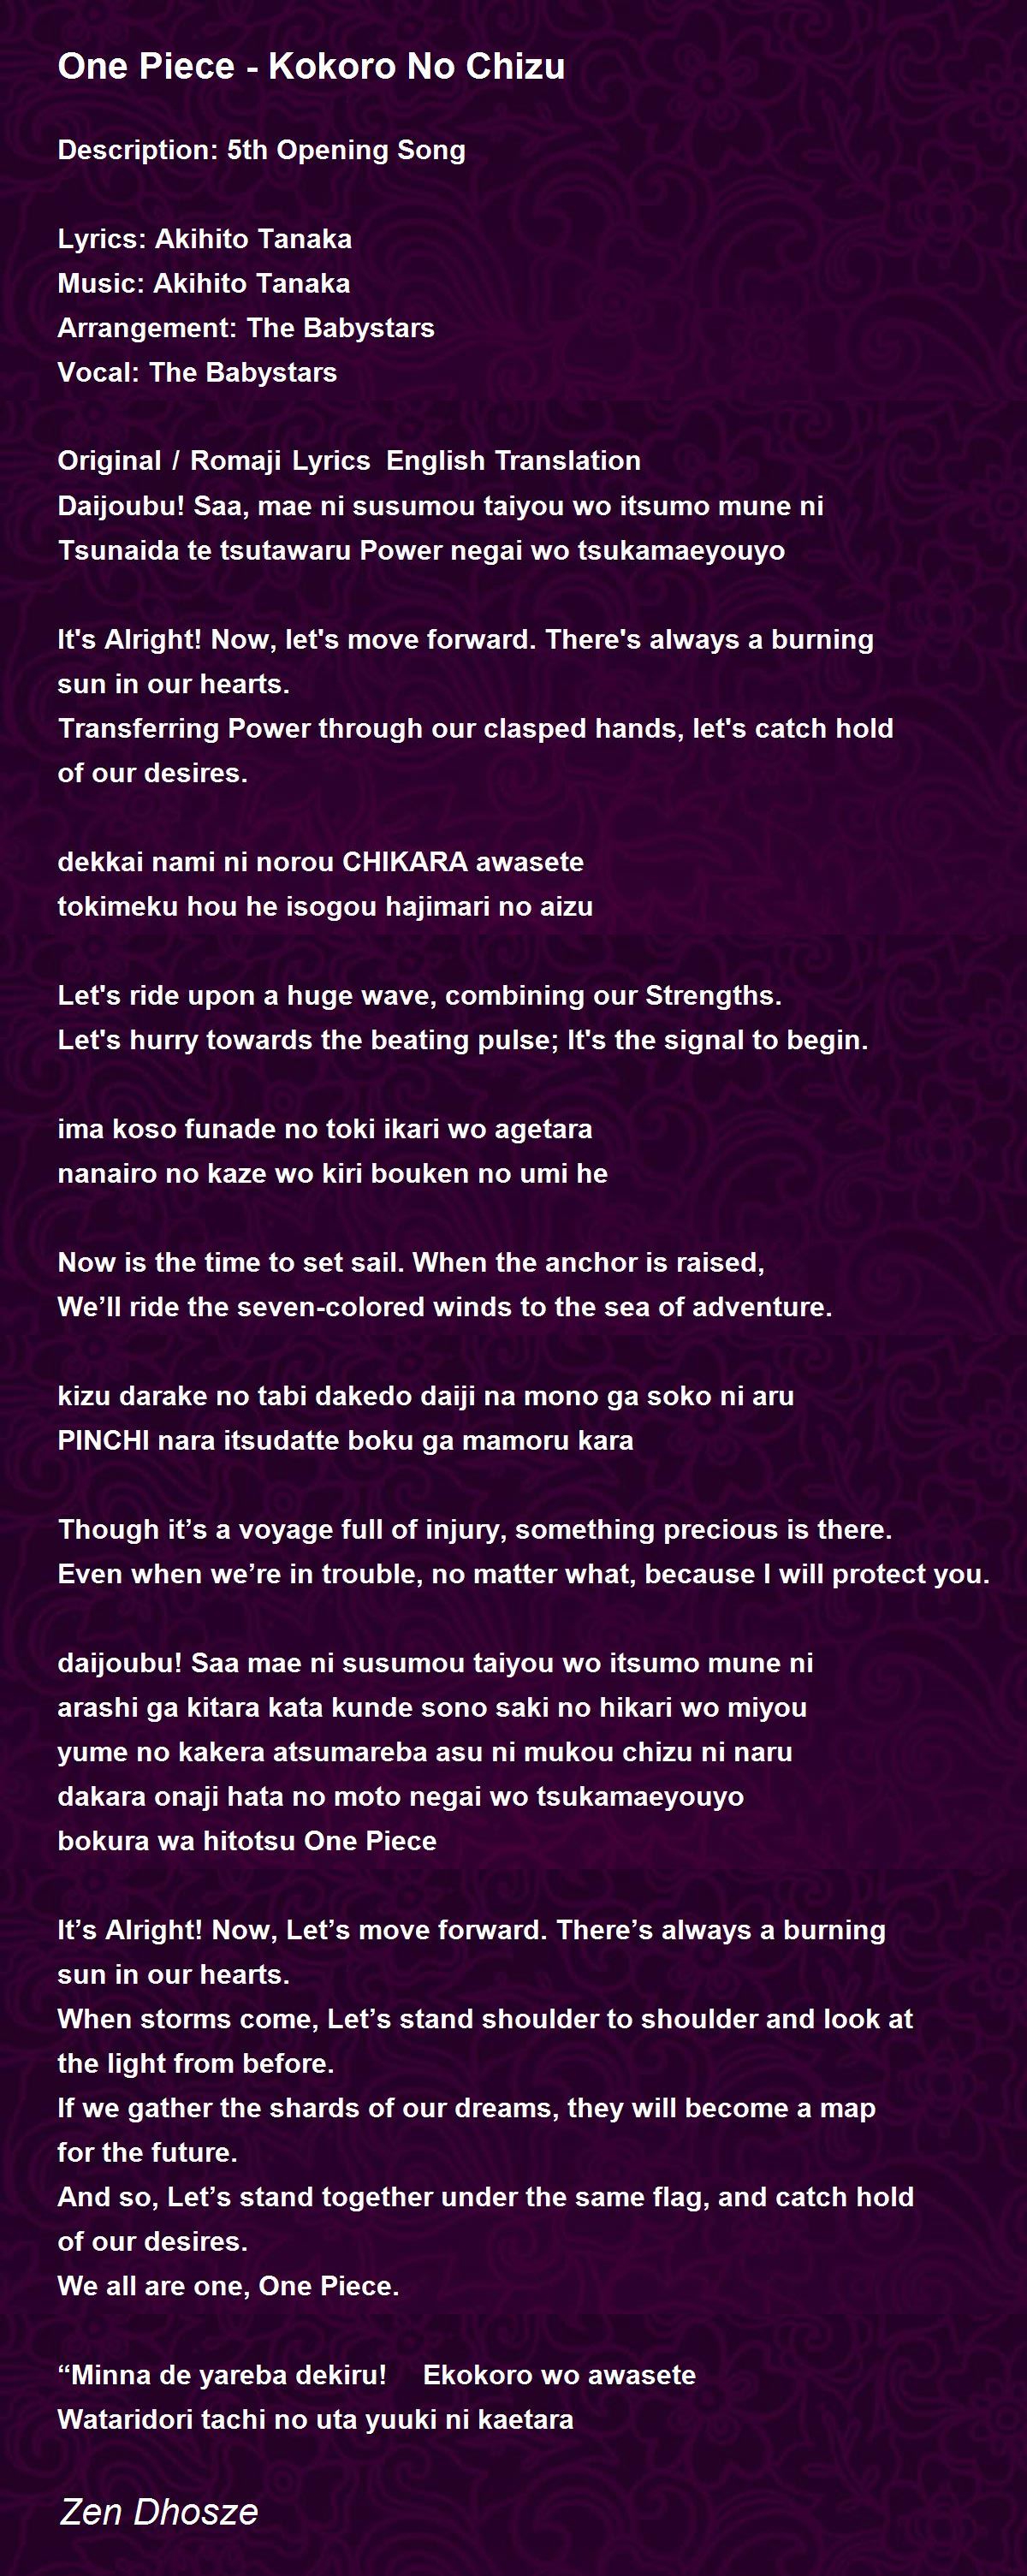 Kokoro no Chizu!#fyp #music #lyrics #onepiece #anime